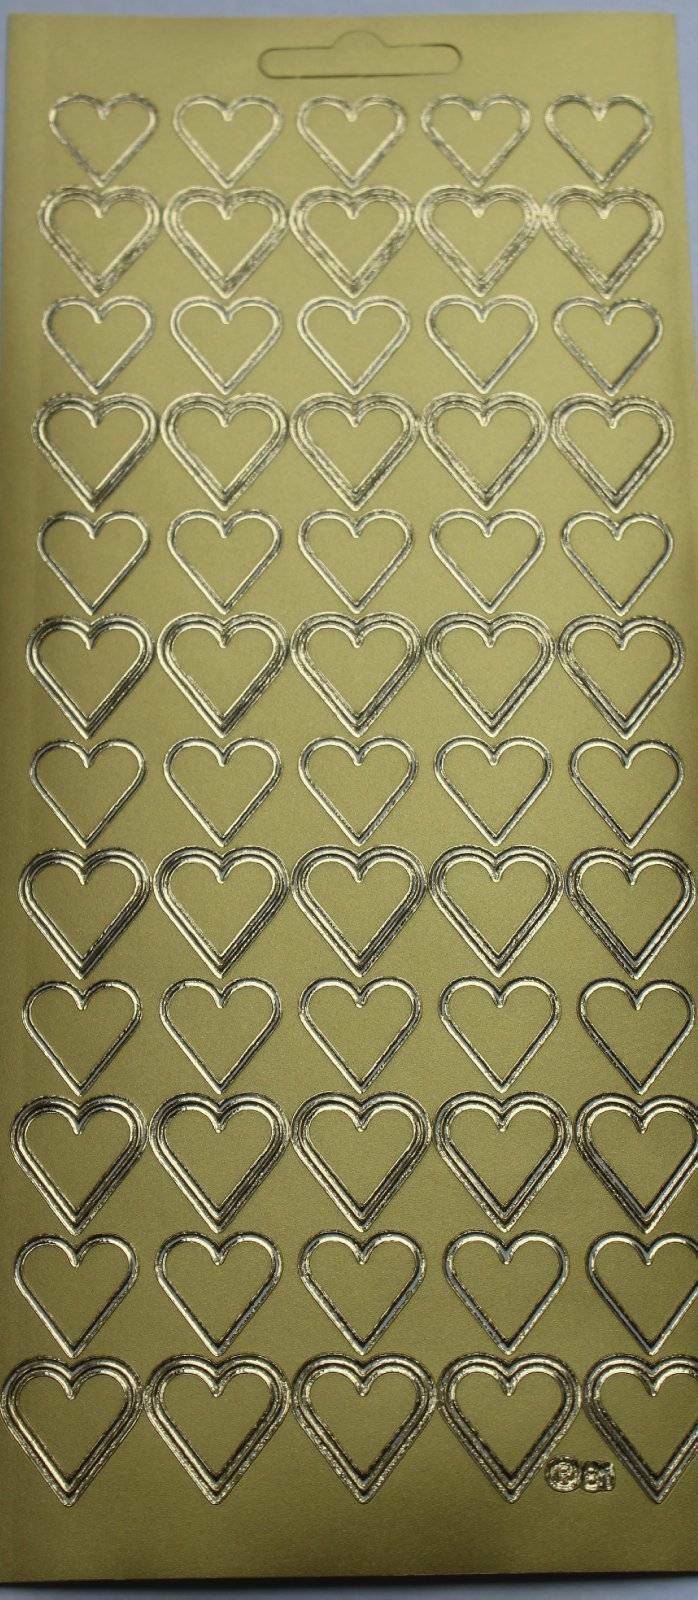 60 Plain Hearts Peel Off Single Sticker Sheet For Card Making Craft Weddings